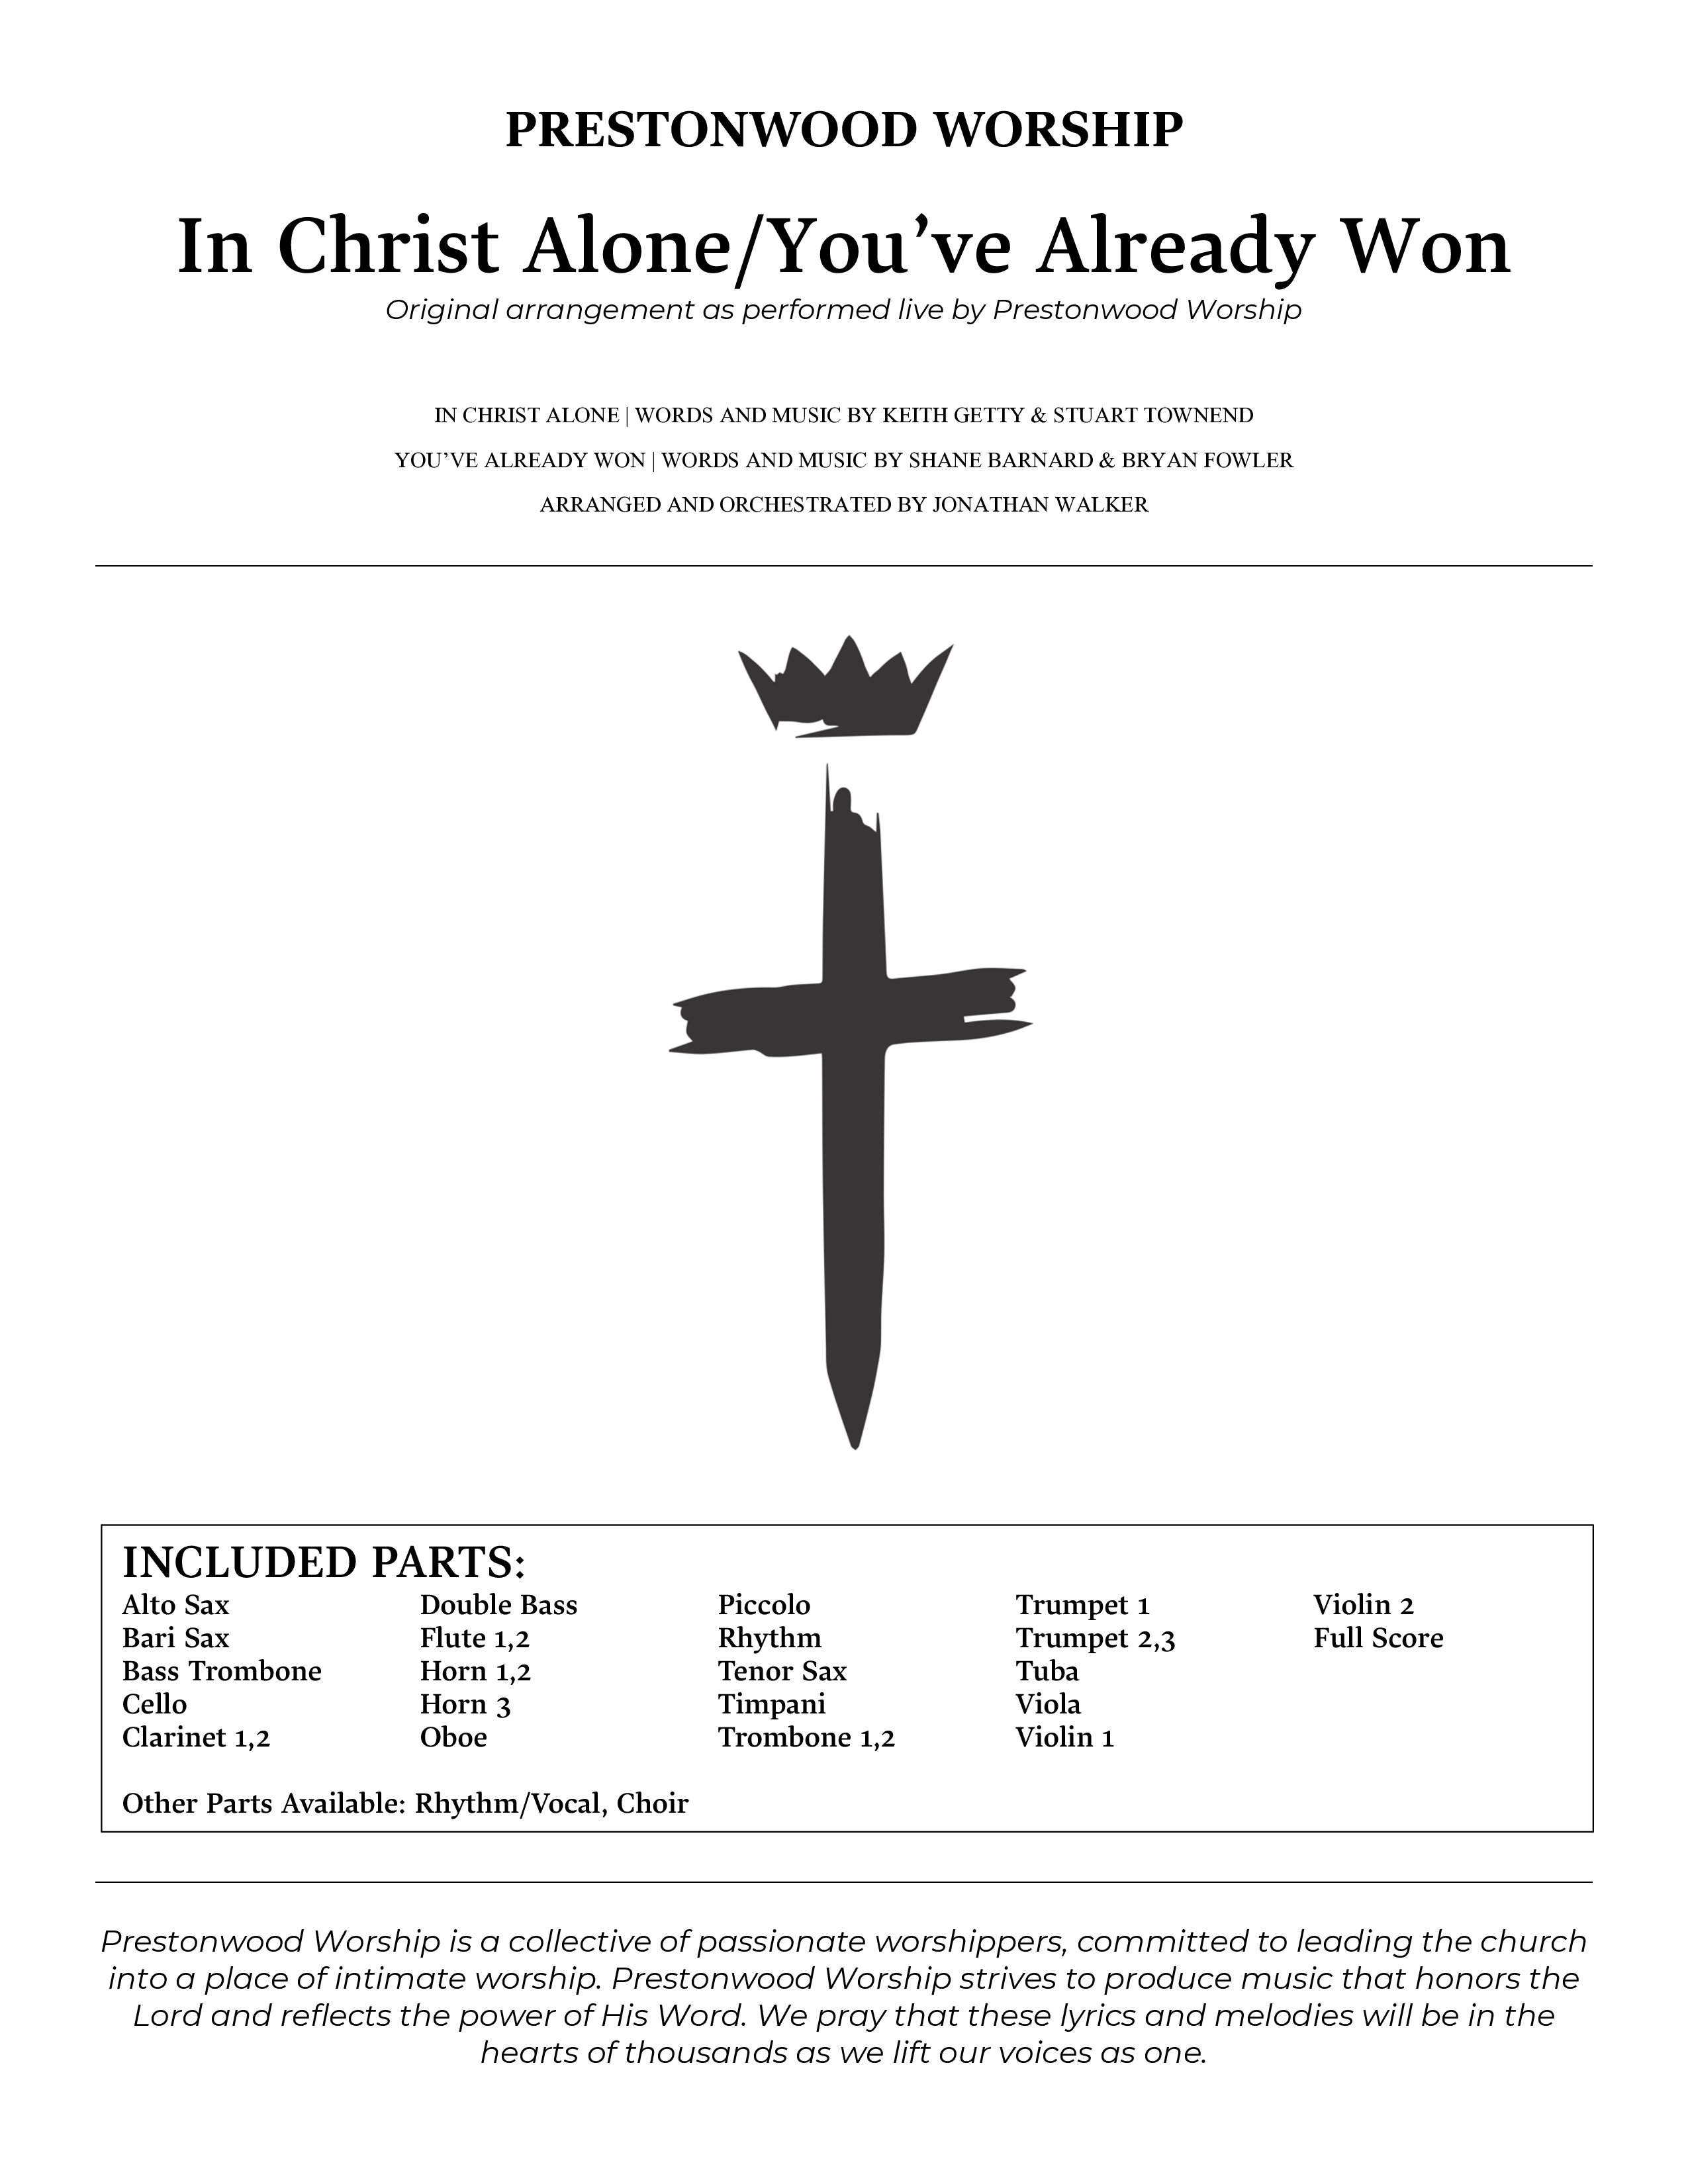 In Christ Alone with You've Already Won (Choral Anthem SATB) Orchestration (Prestonwood Choir / Prestonwood Worship / Arr. Jonathan Walker)